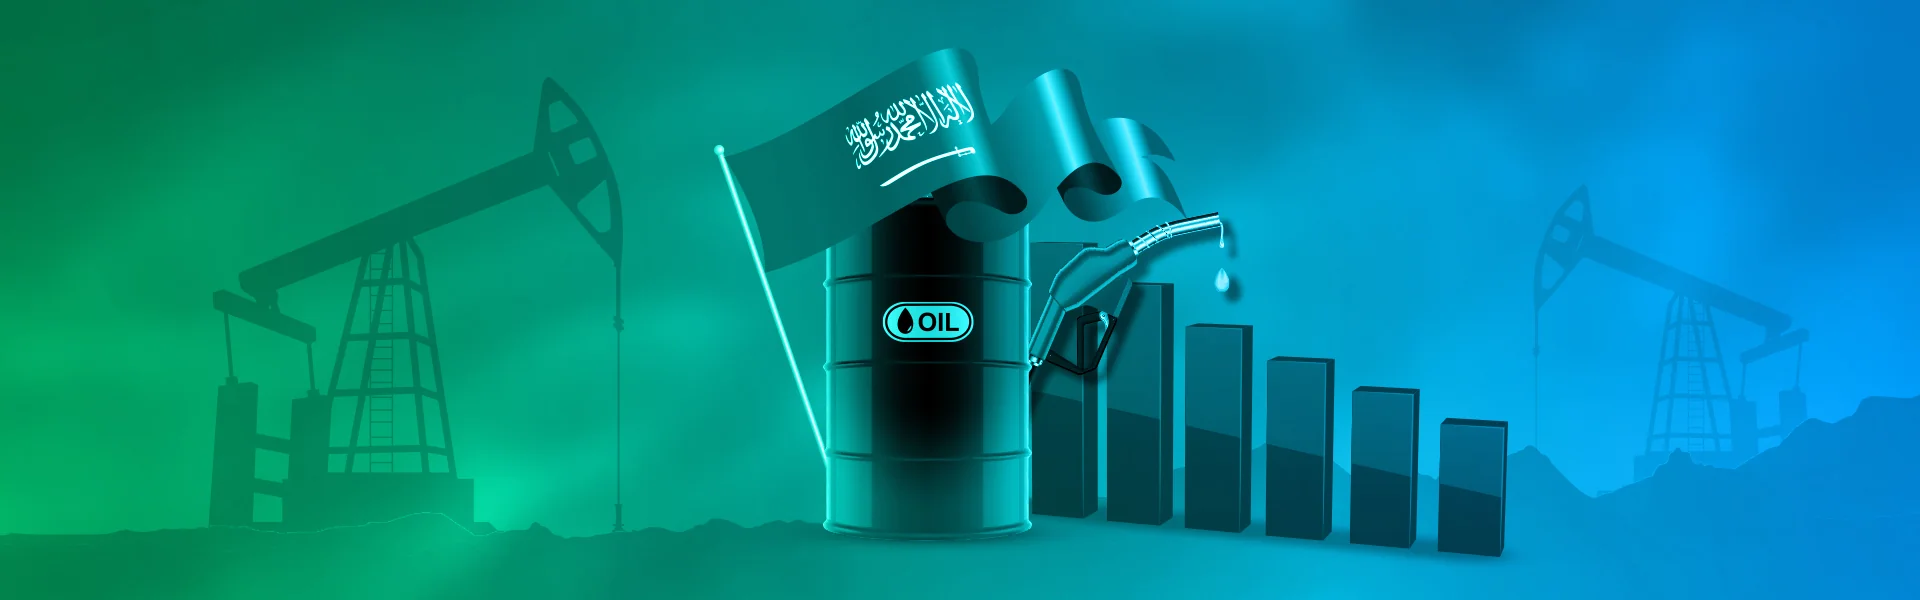 saudi arabia to cut oil production company news 1920x600